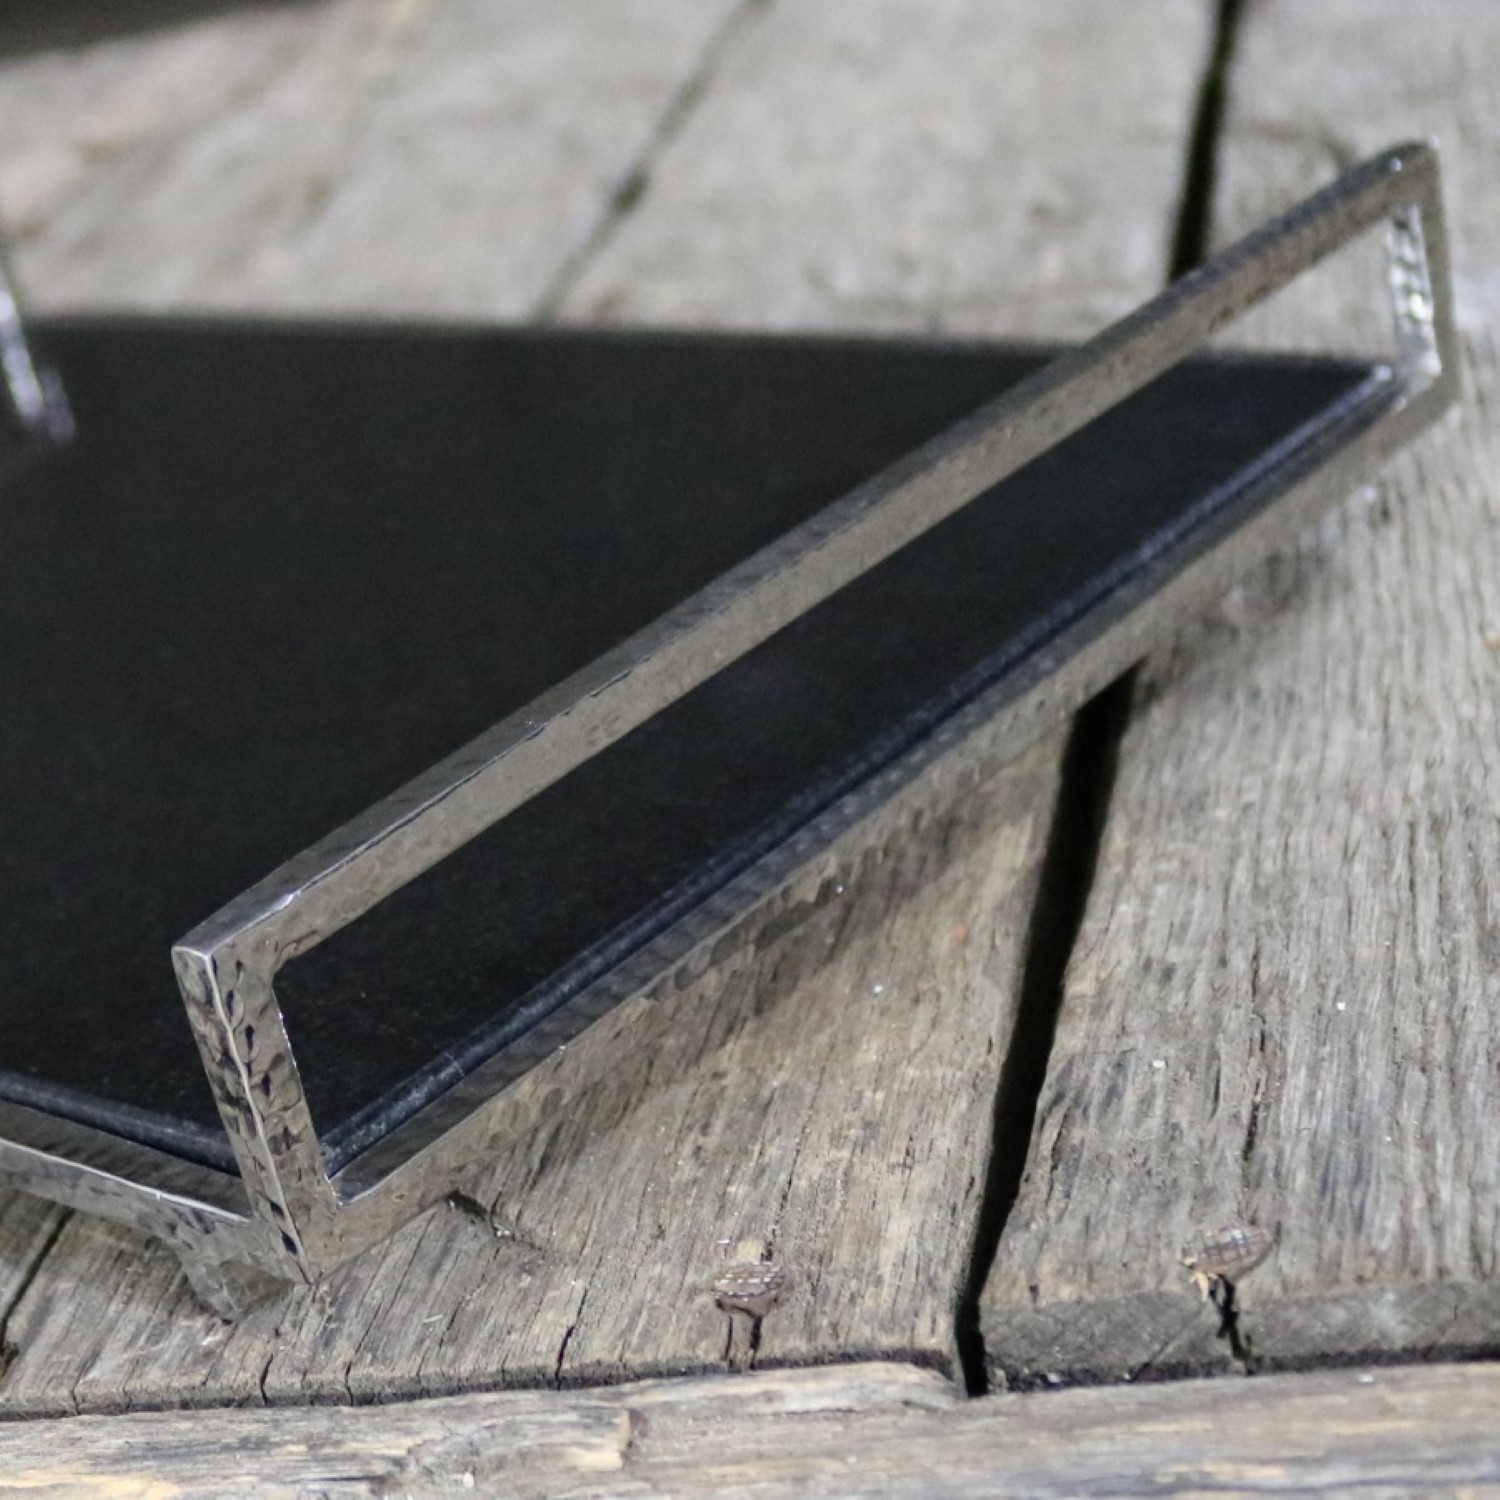 Michael Aram Geometric Cheese Board Polished Stainless Steel and Black Granite